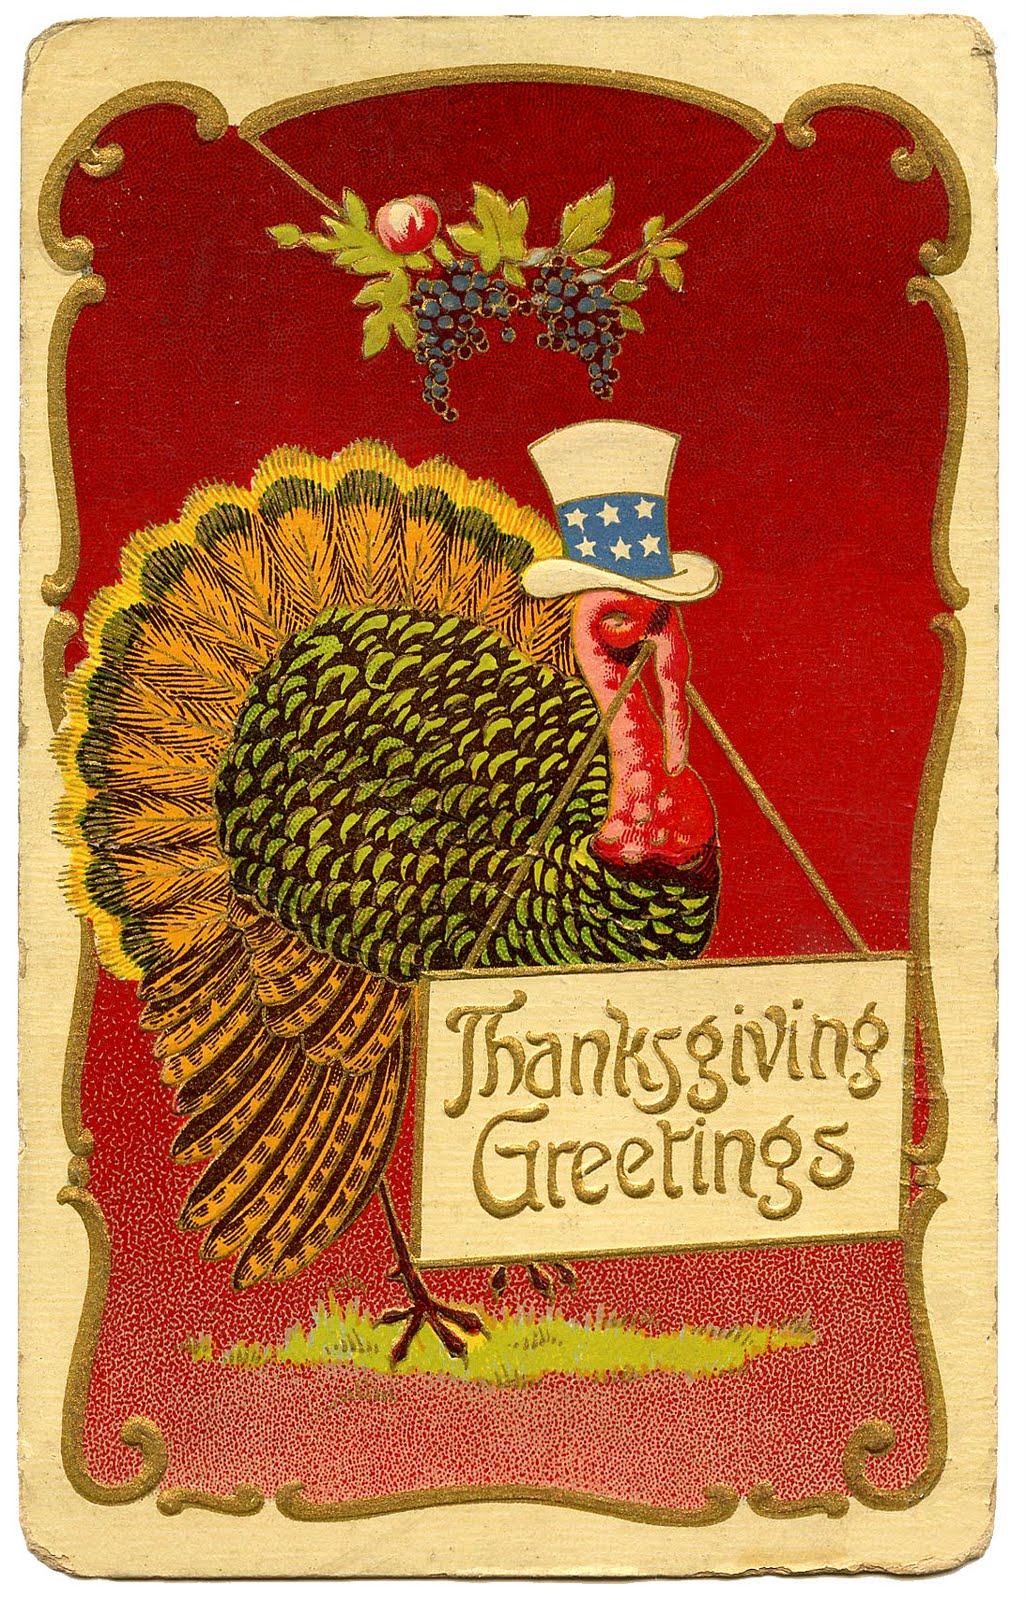 Vintage Thanksgiving Clip Art - Patriotic Turkey - The Graphics Fairy